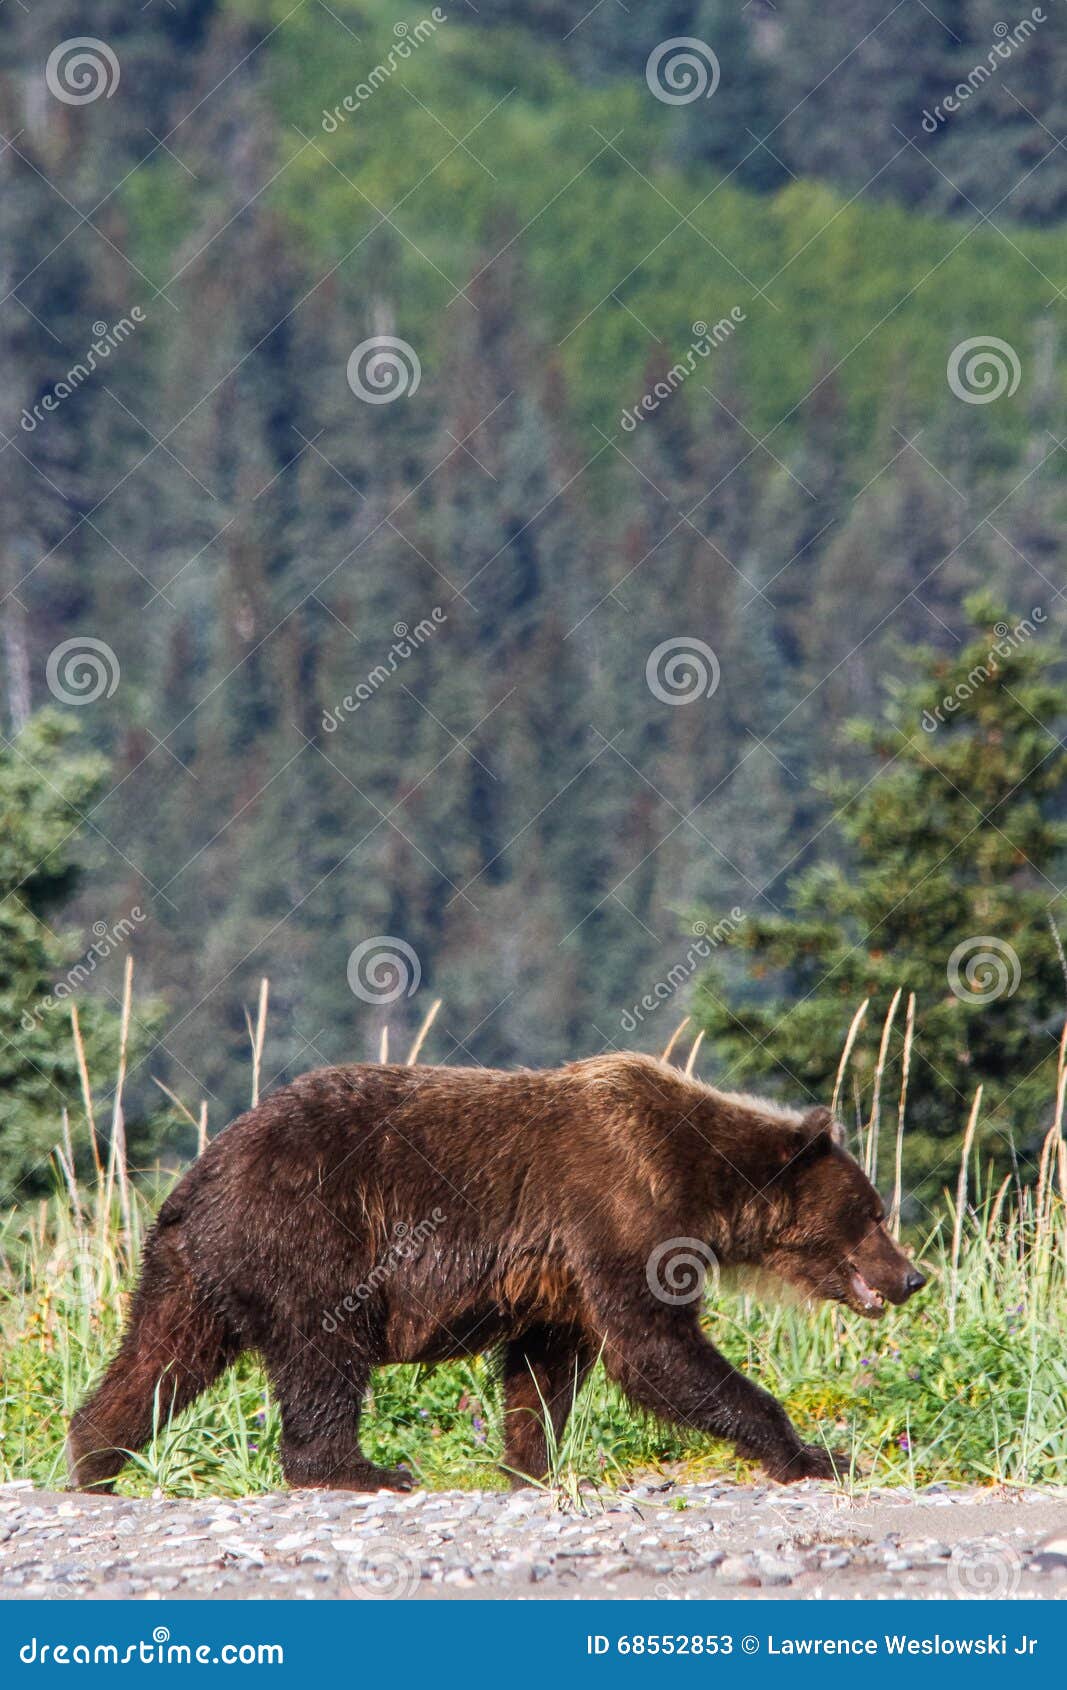 alaska brown grizzly bear lake clark national park